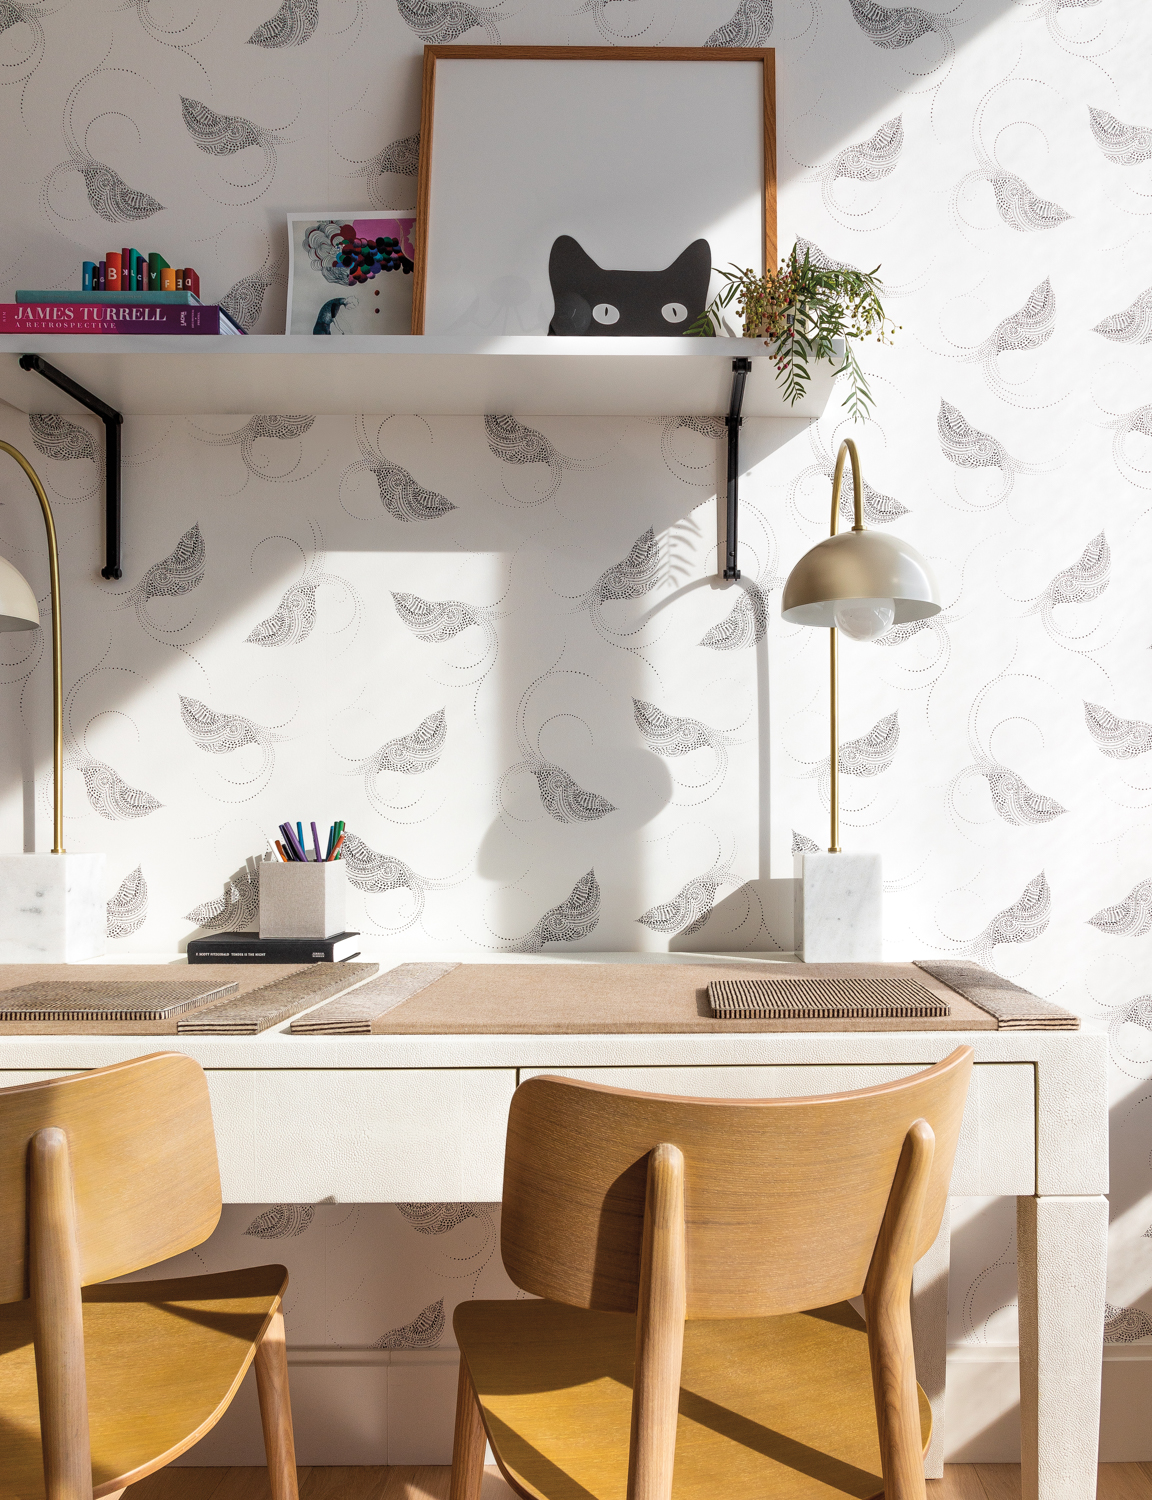 A wallpaper has a bird...